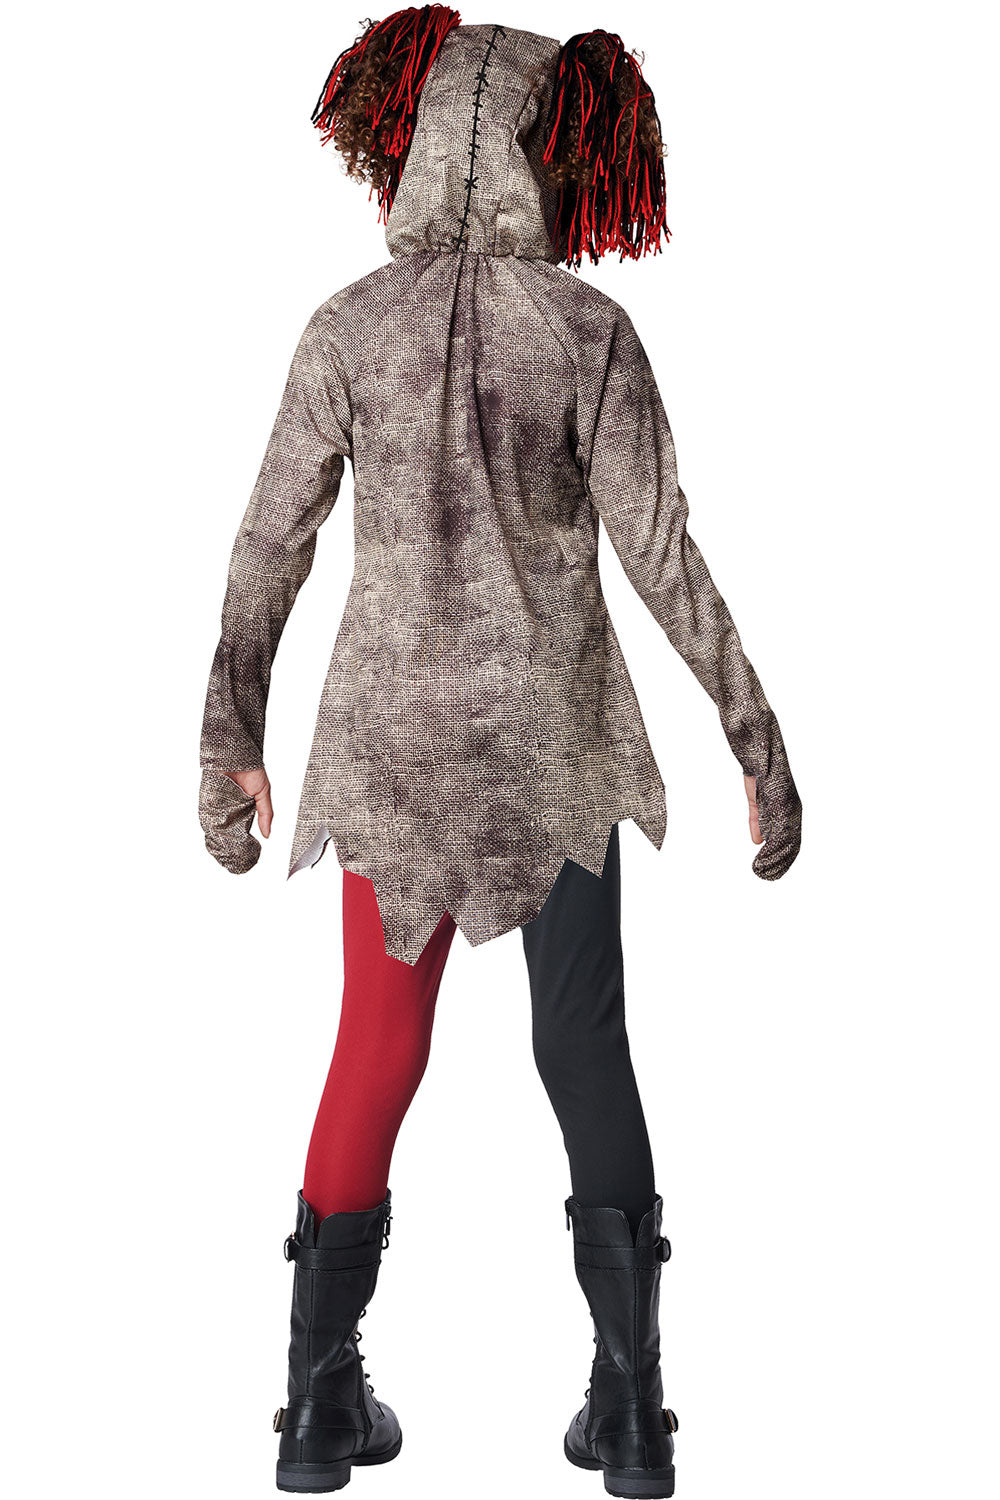 Voodoo Tunic Dress / Child California Costume 3021-103